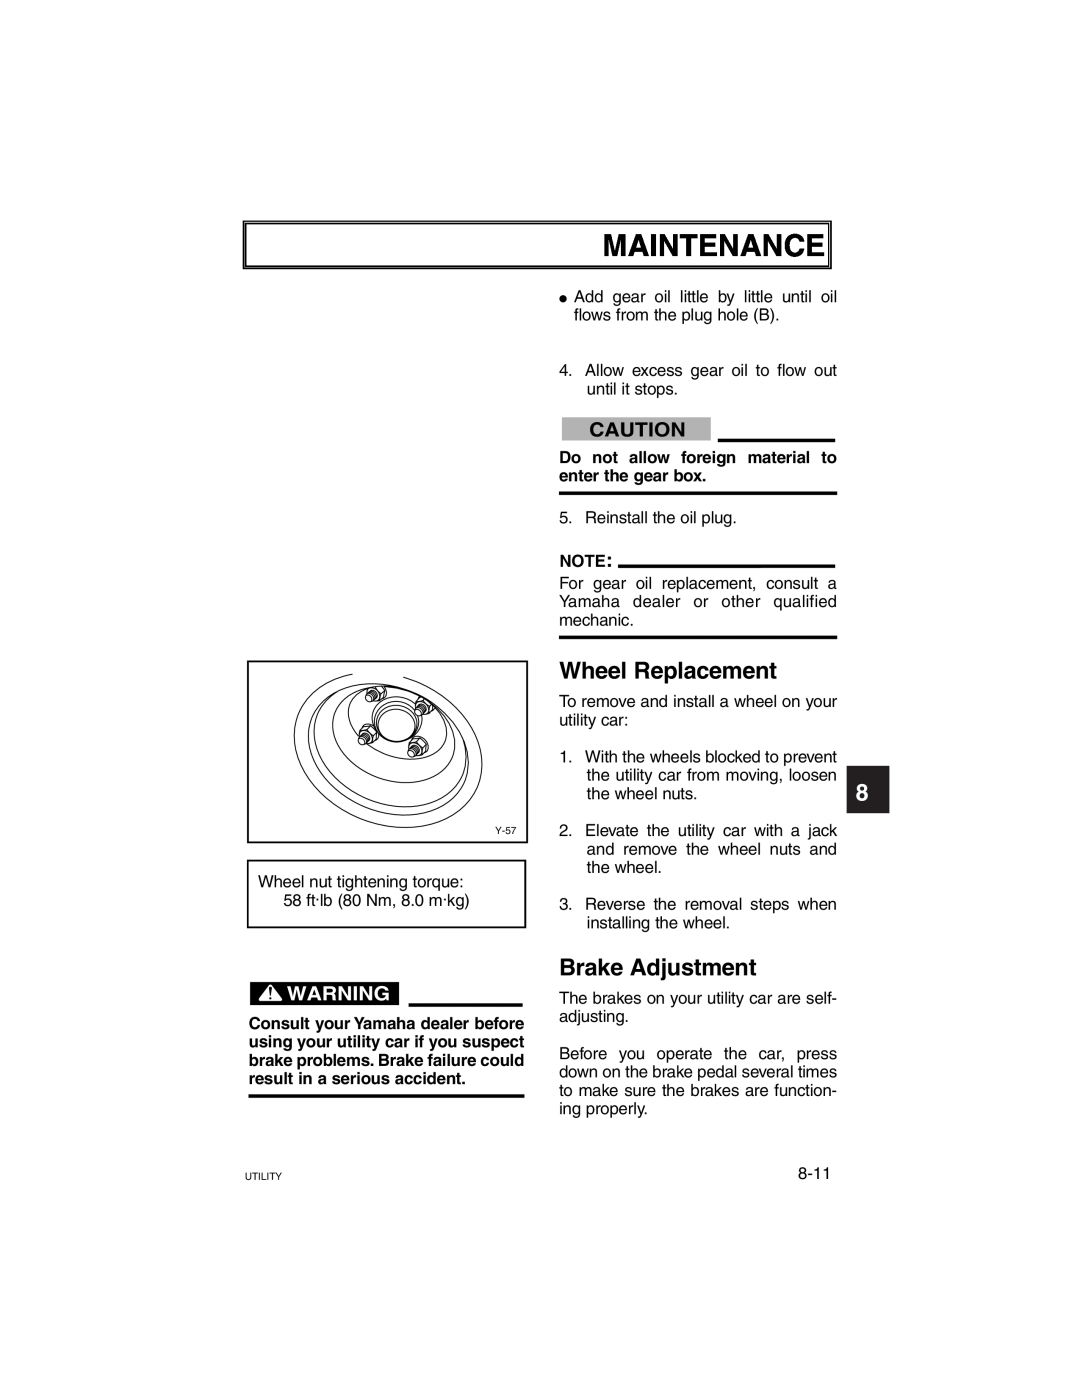 Yamaha G21A manual Maintenance, 1 2 3, Wheel Replacement, Brake Adjustment 